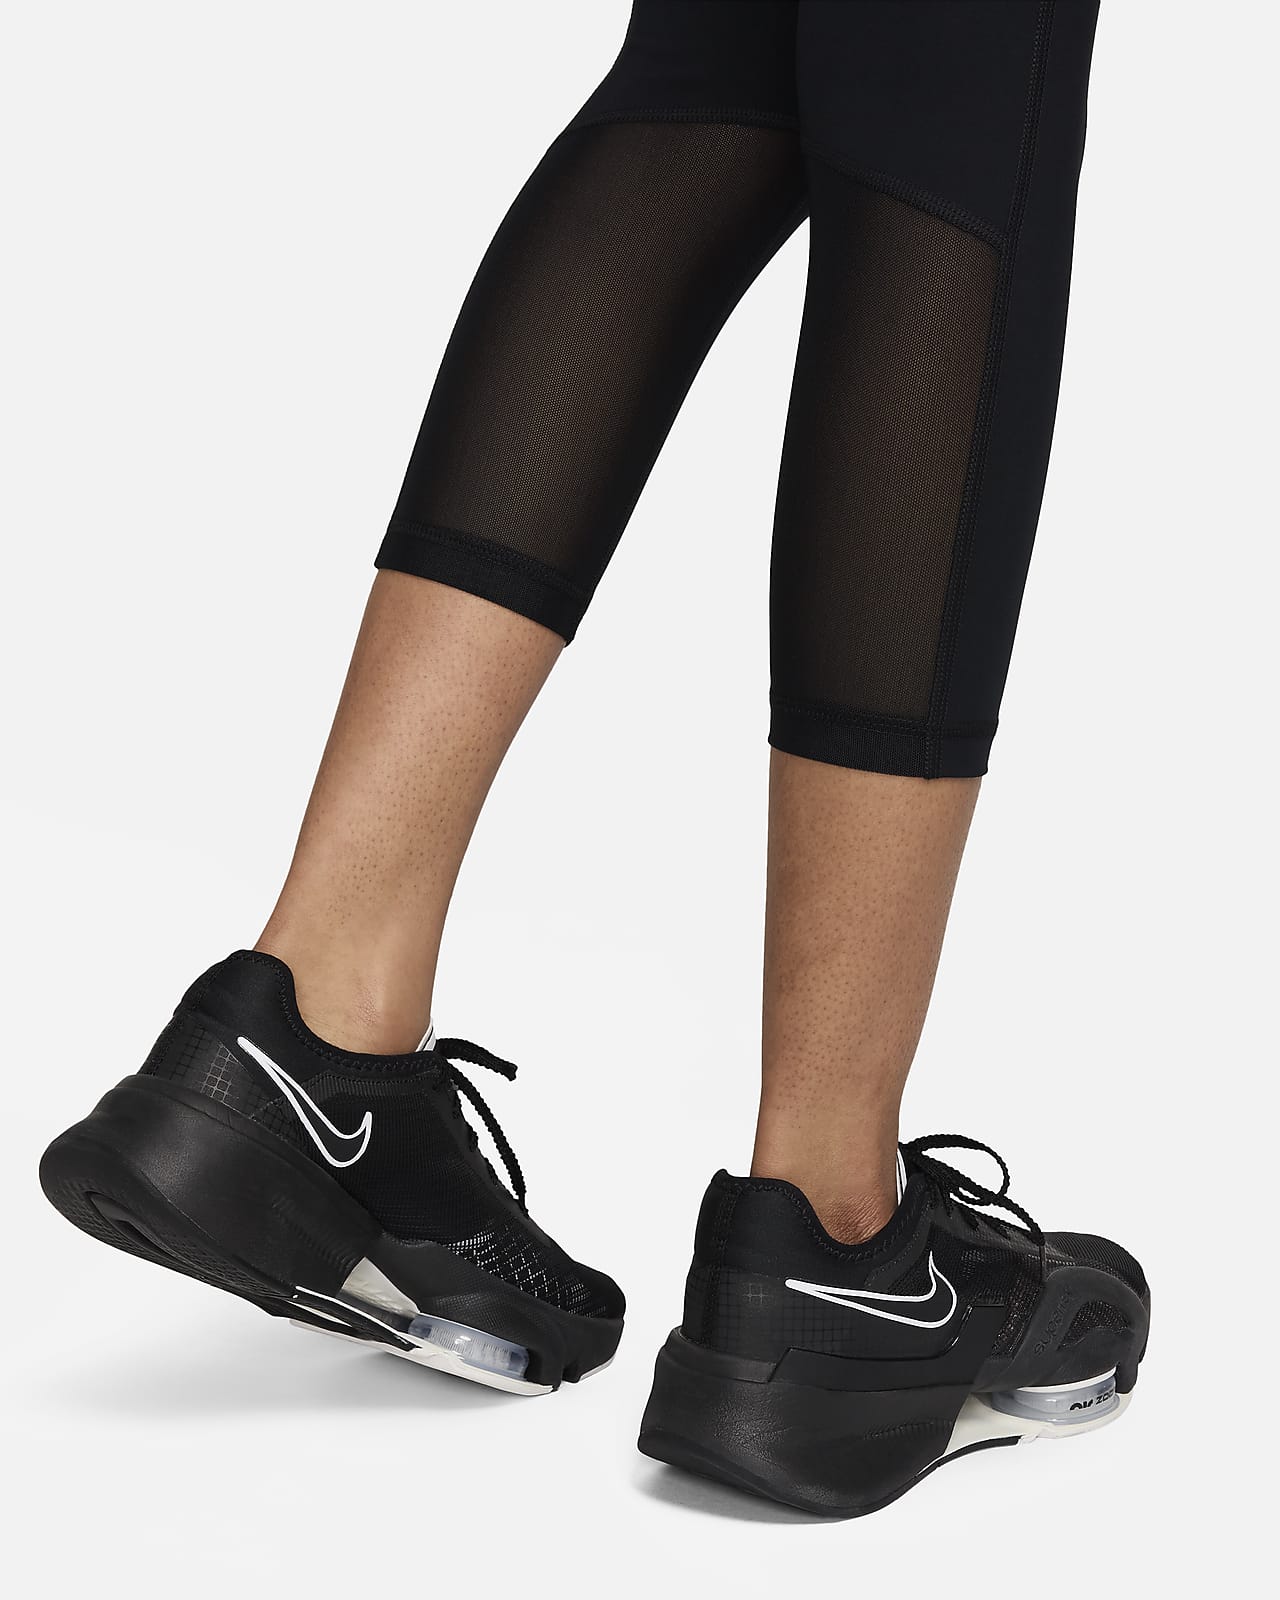 Nike Women's Pro 365 Crop Tight (Gunsmoke/HTR/Gunsmoke/Black, X